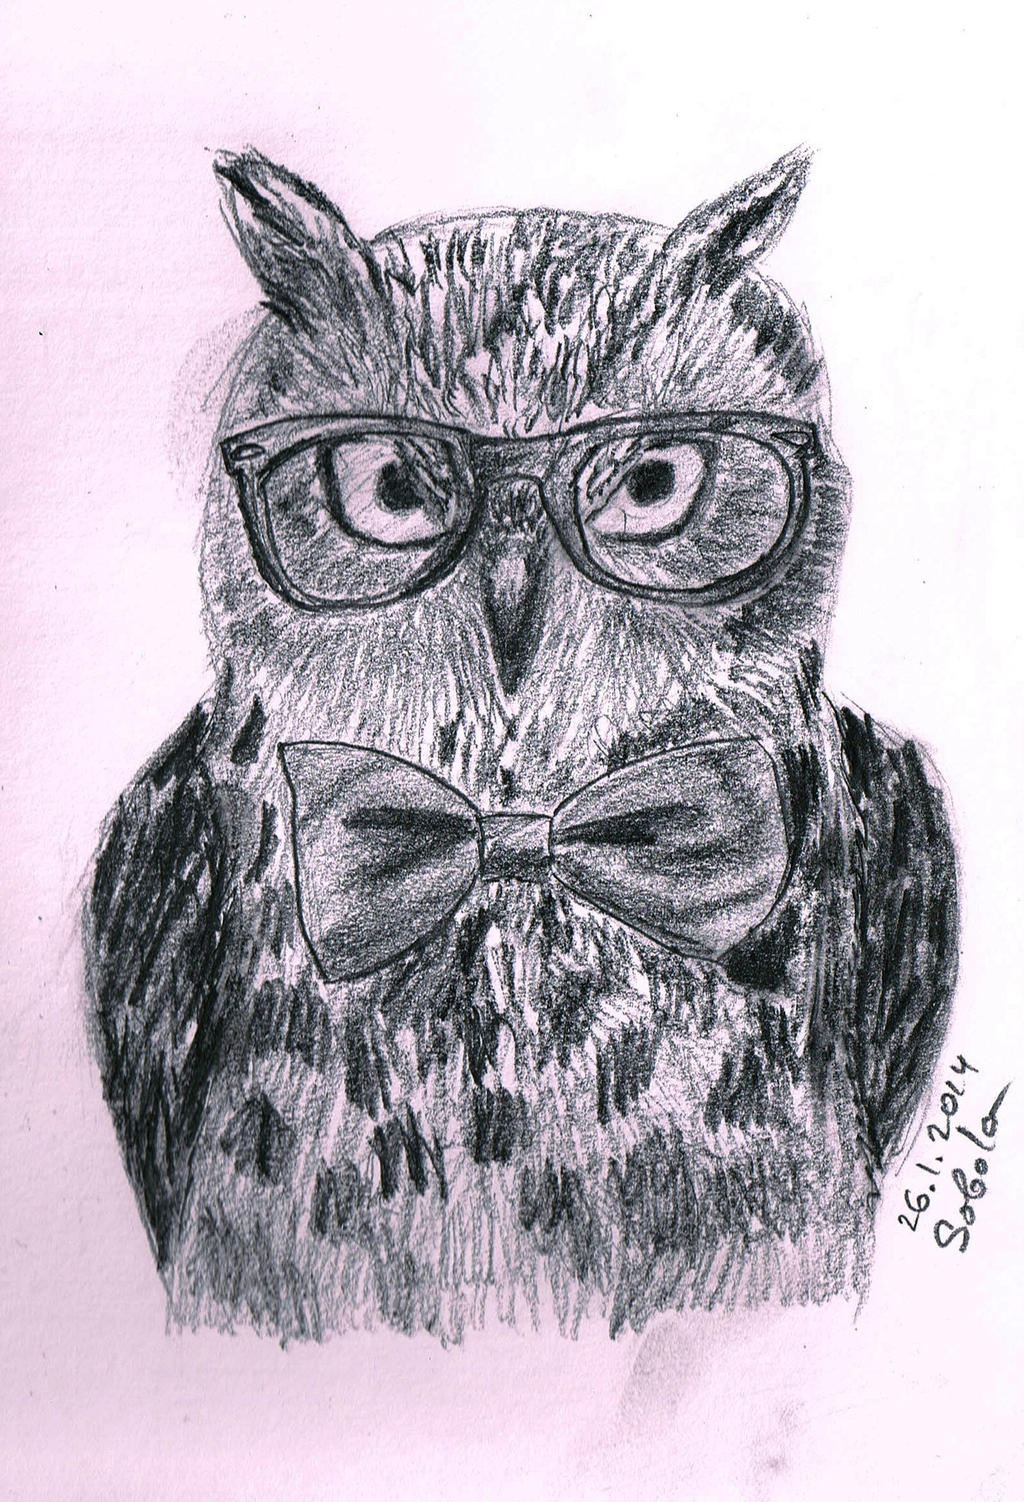 The Smart Owl